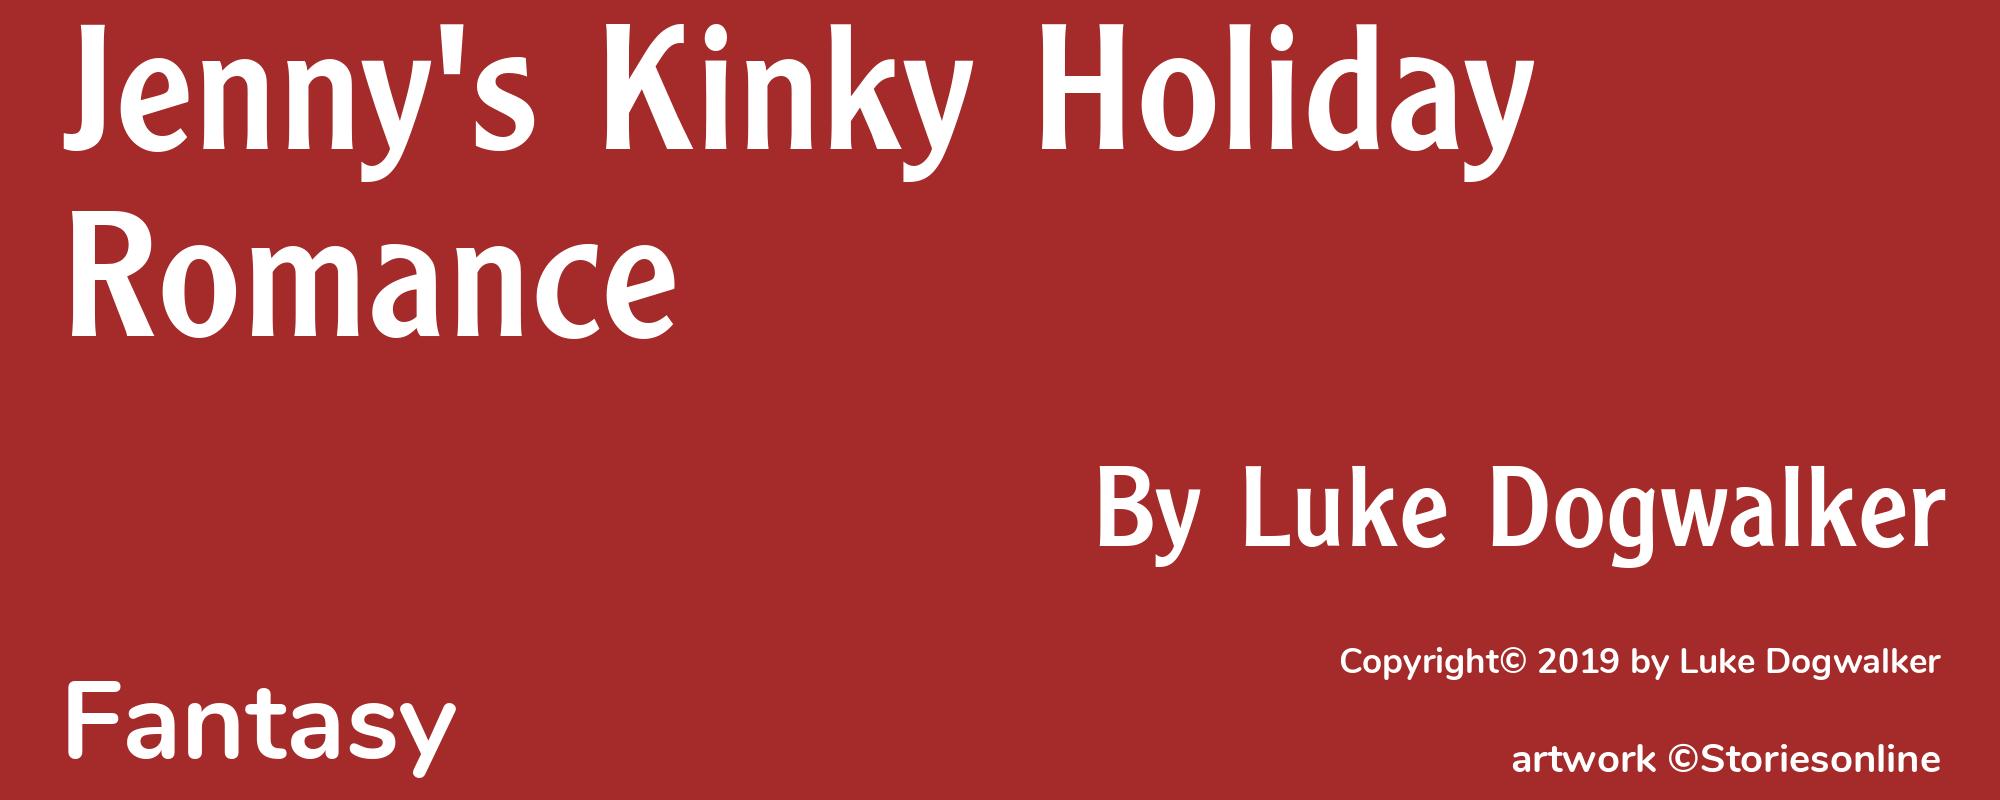 Jenny's Kinky Holiday Romance - Cover